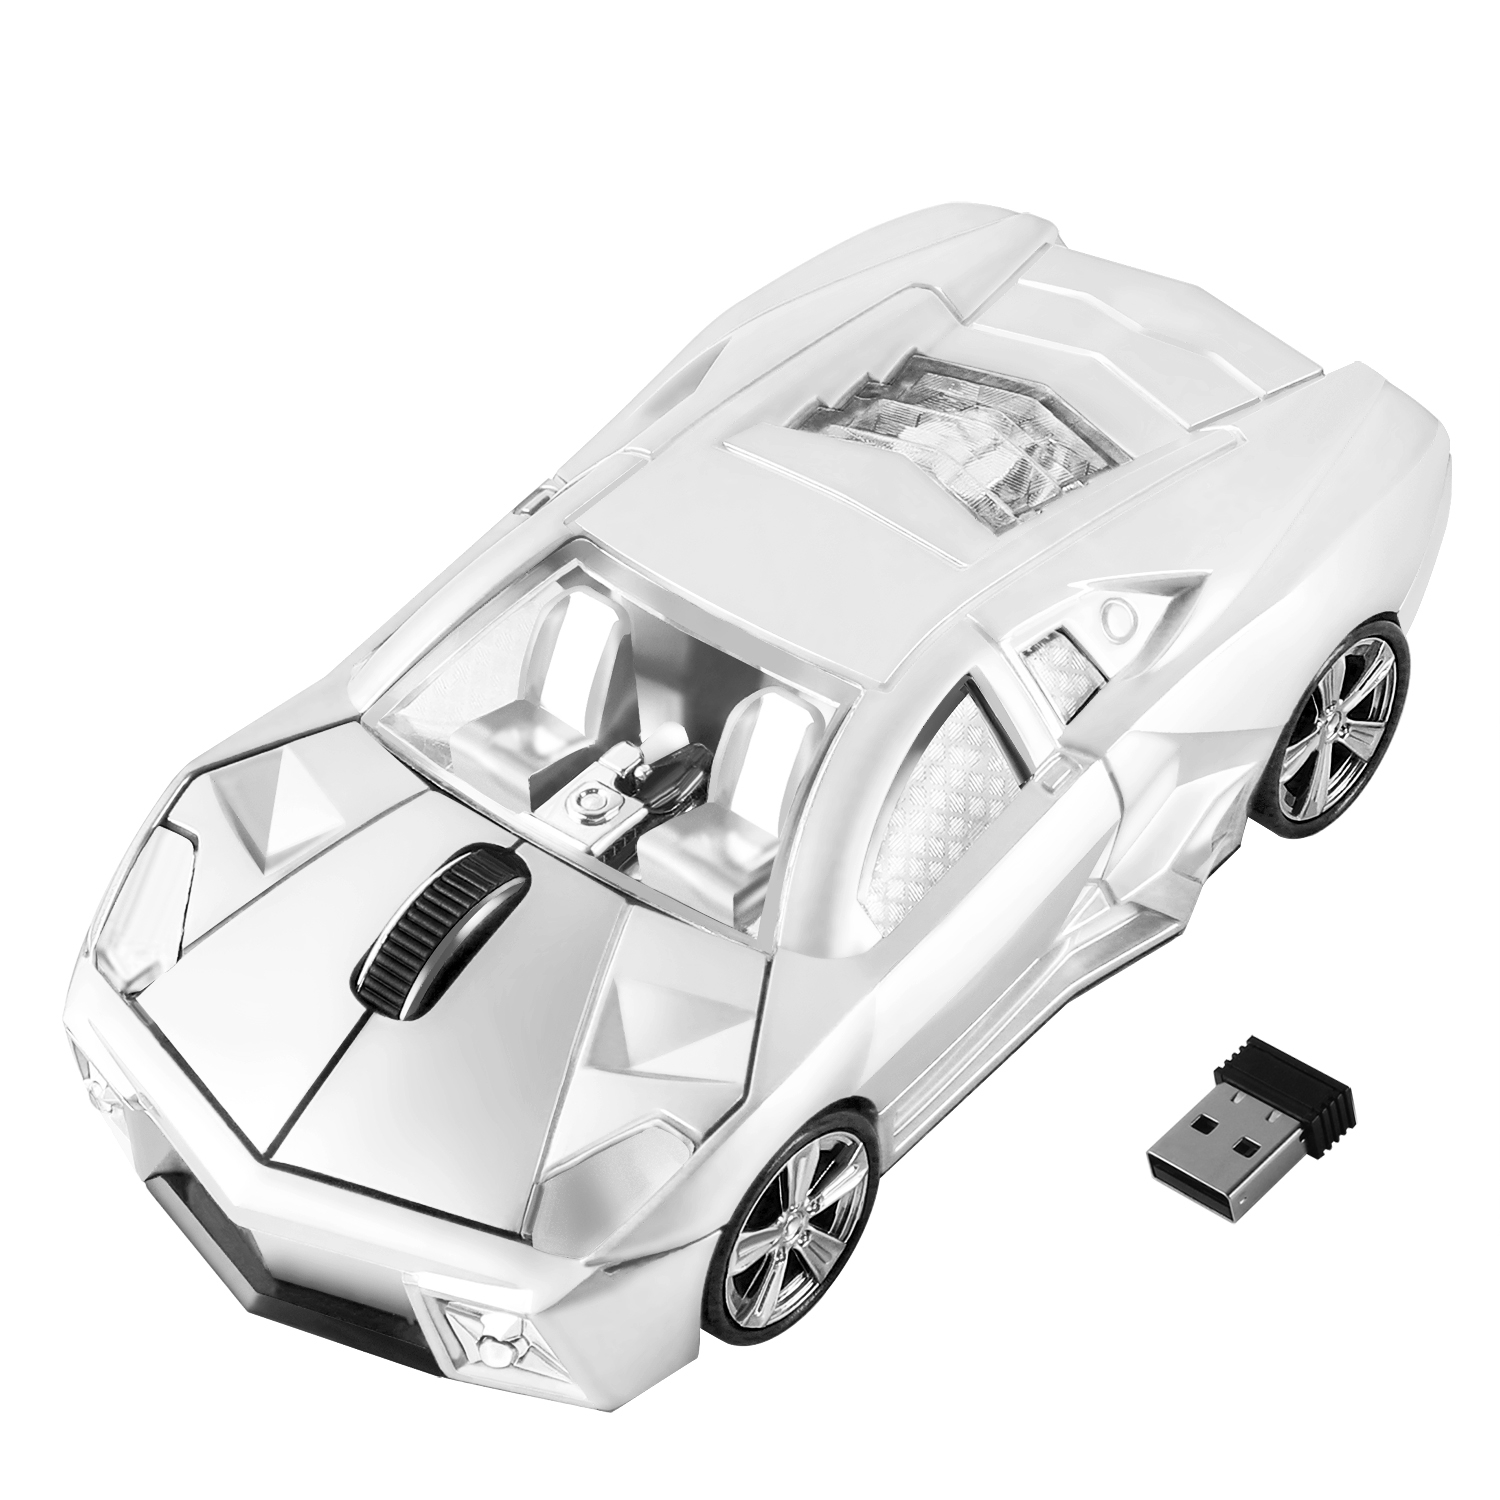 2-4G-Wireless-Mouse-Ergonomic-Sports-Car-Design-Gaming-Mause-1600-DPI-USB-Optical-Kids-Regalo (10)